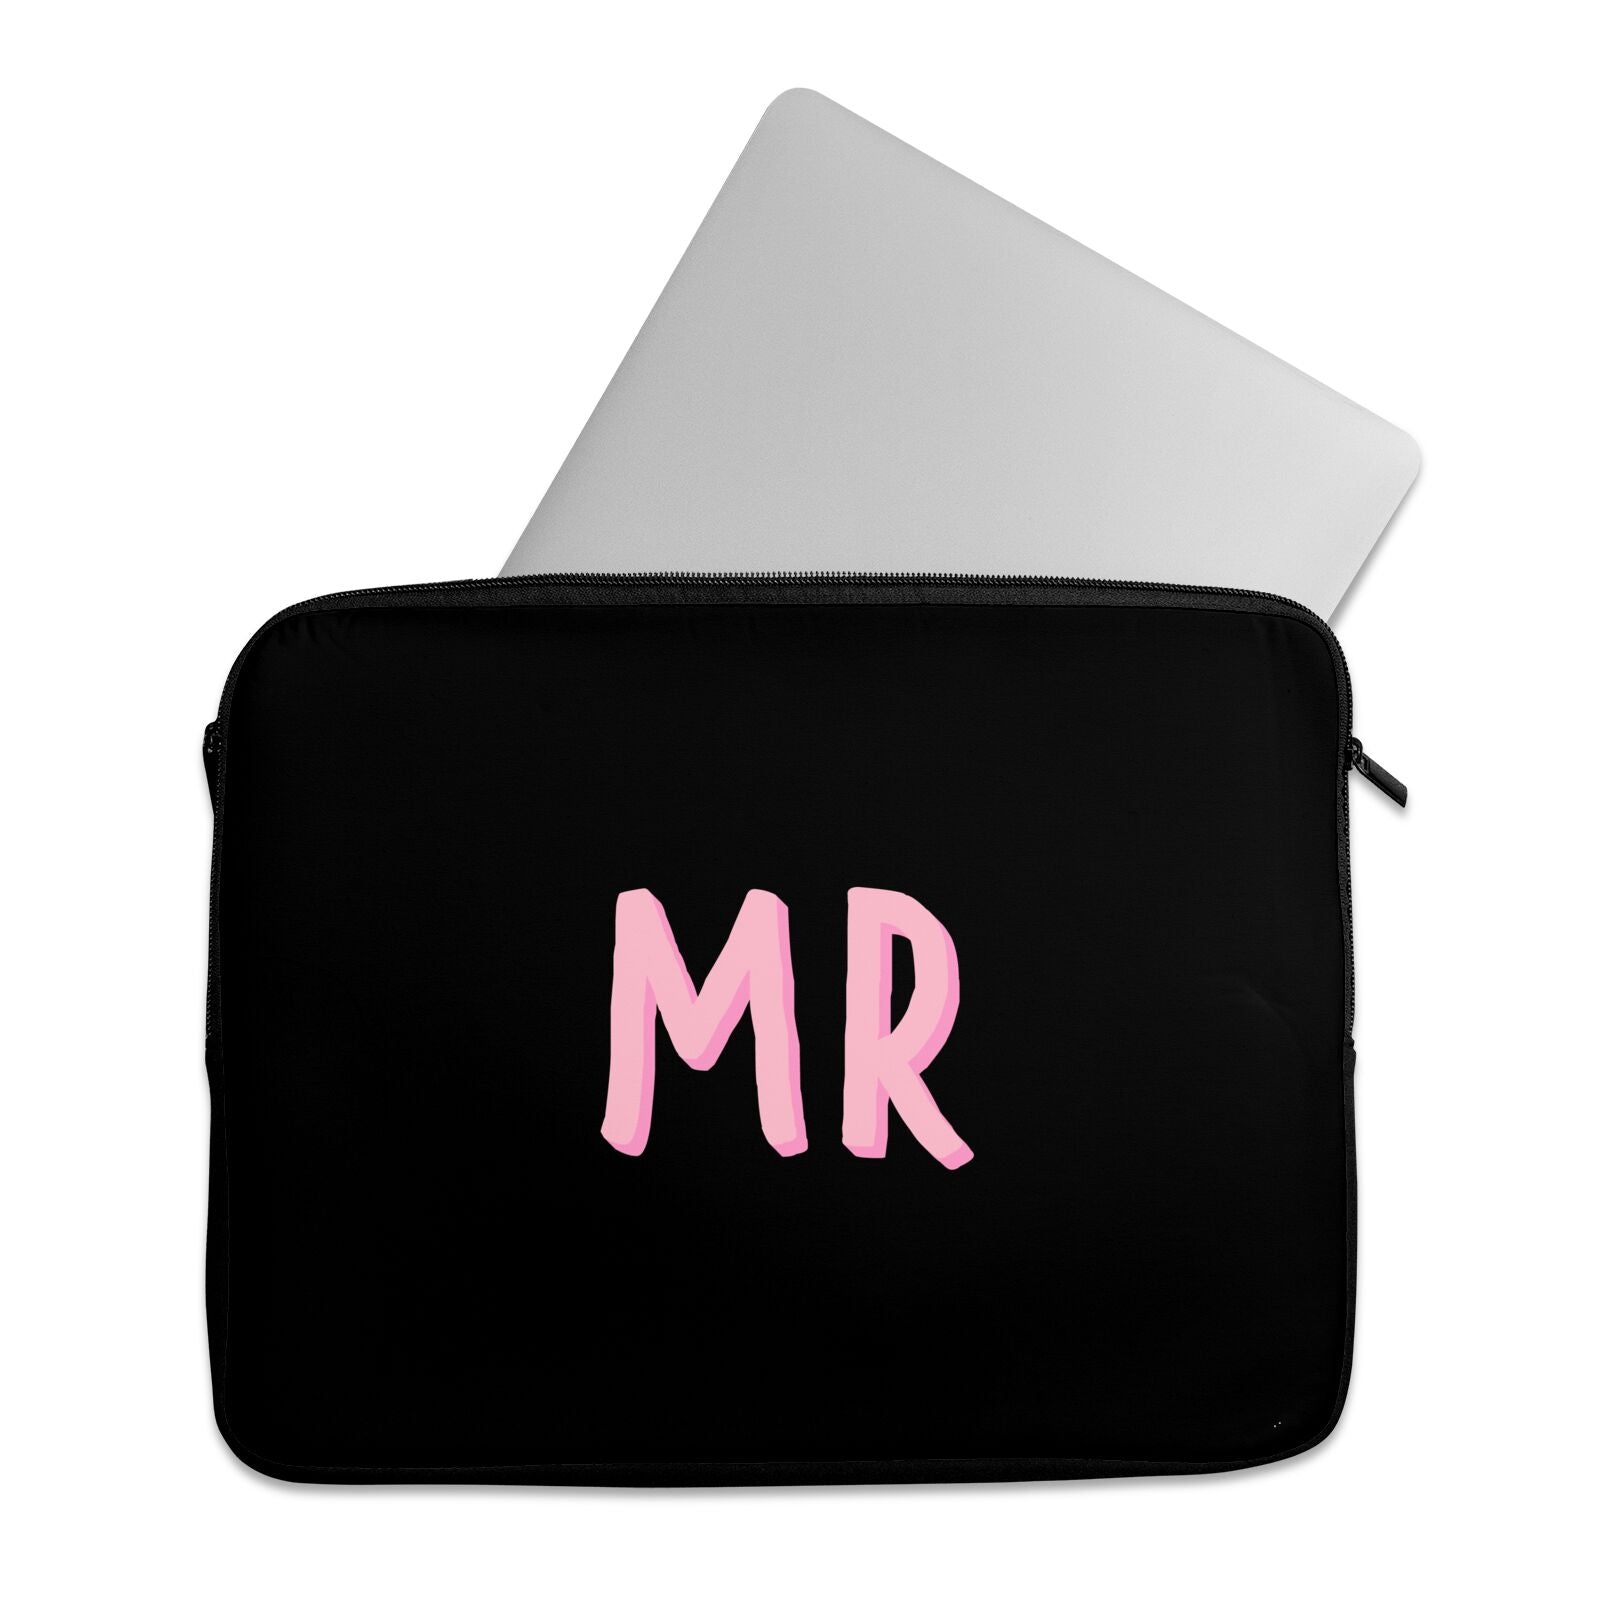 Mr Laptop Bag with Zipper